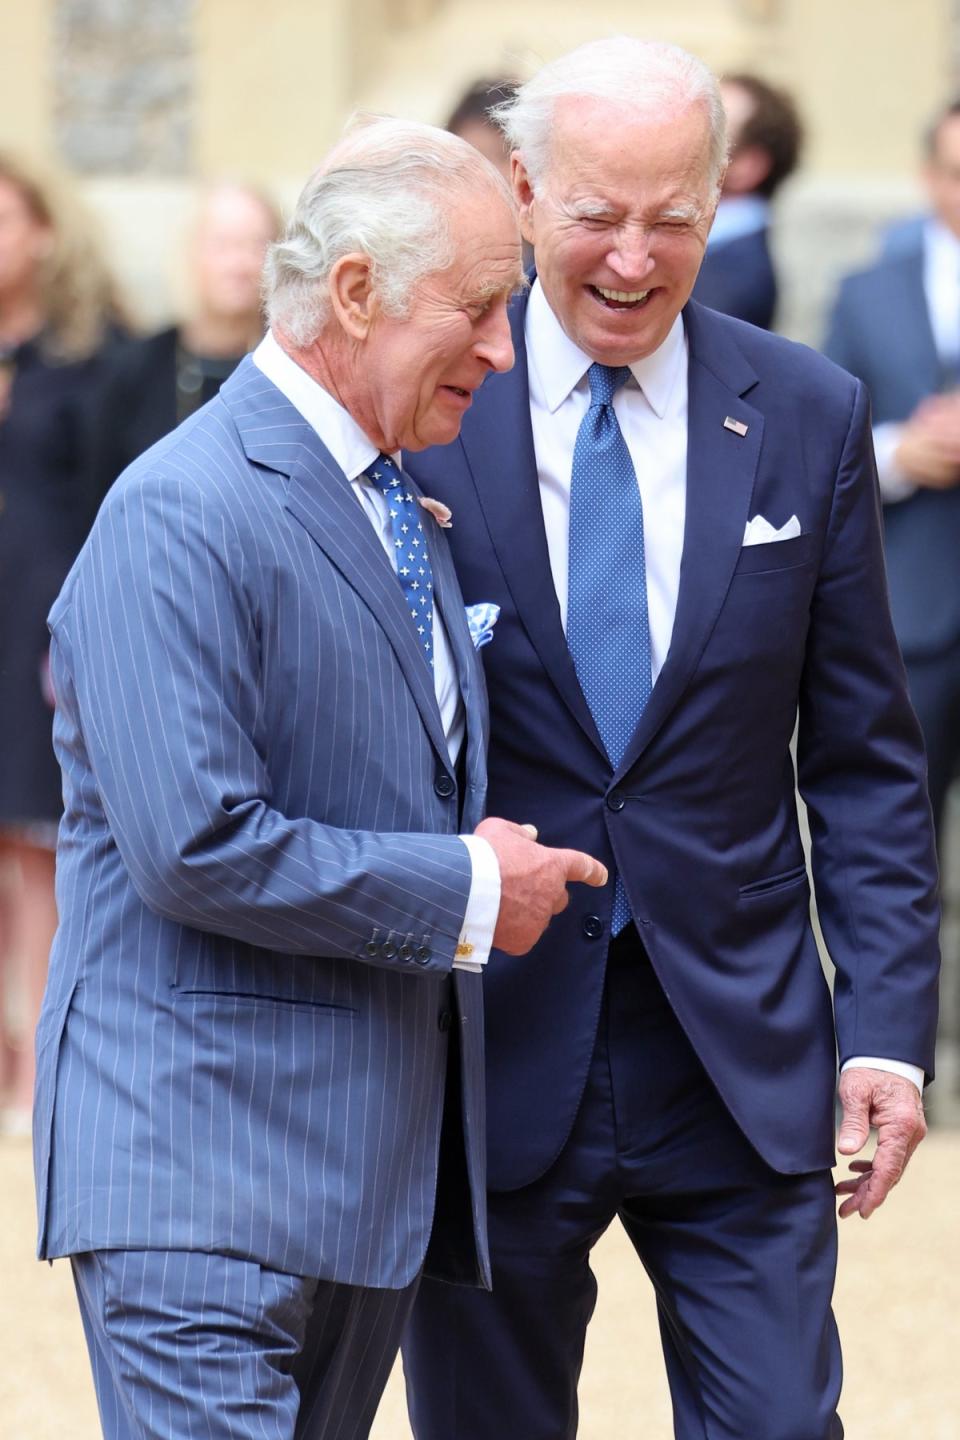 Charles and Biden share a joke at Windsor Castle (Chris Jackson/Getty Images)